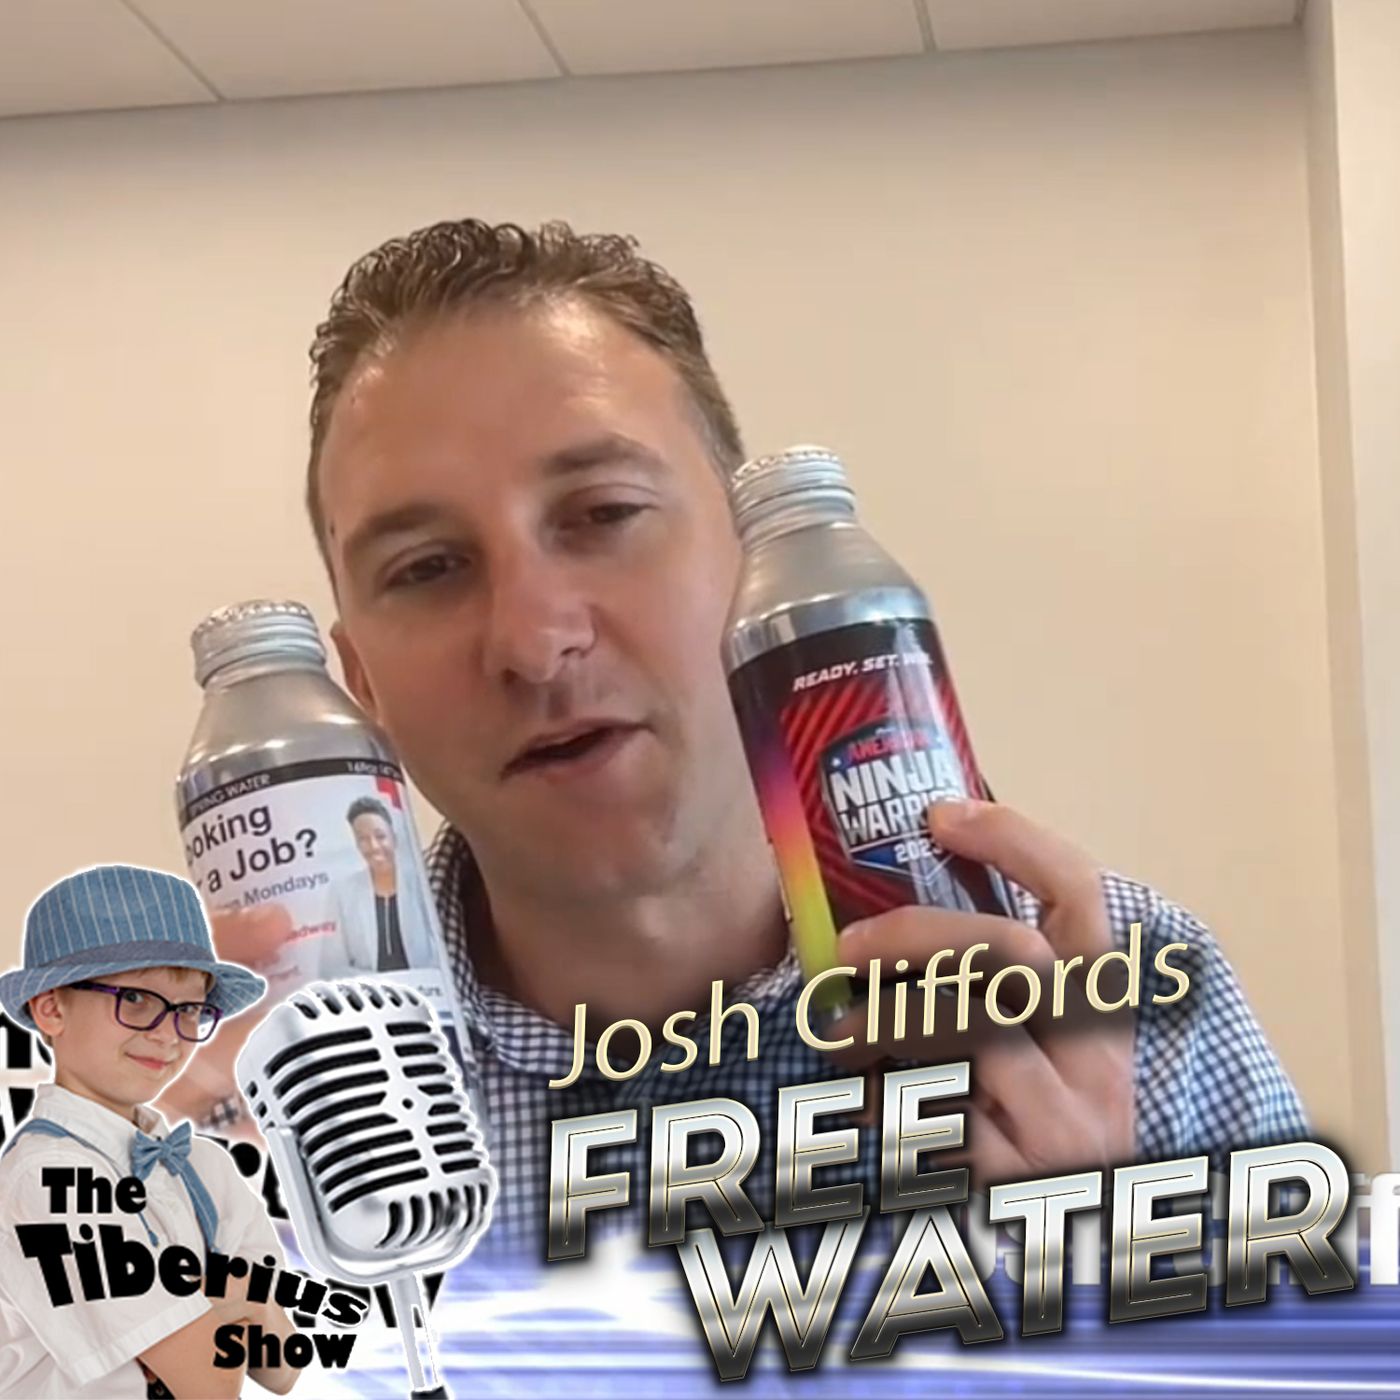 Free Water - Josh Cliffords